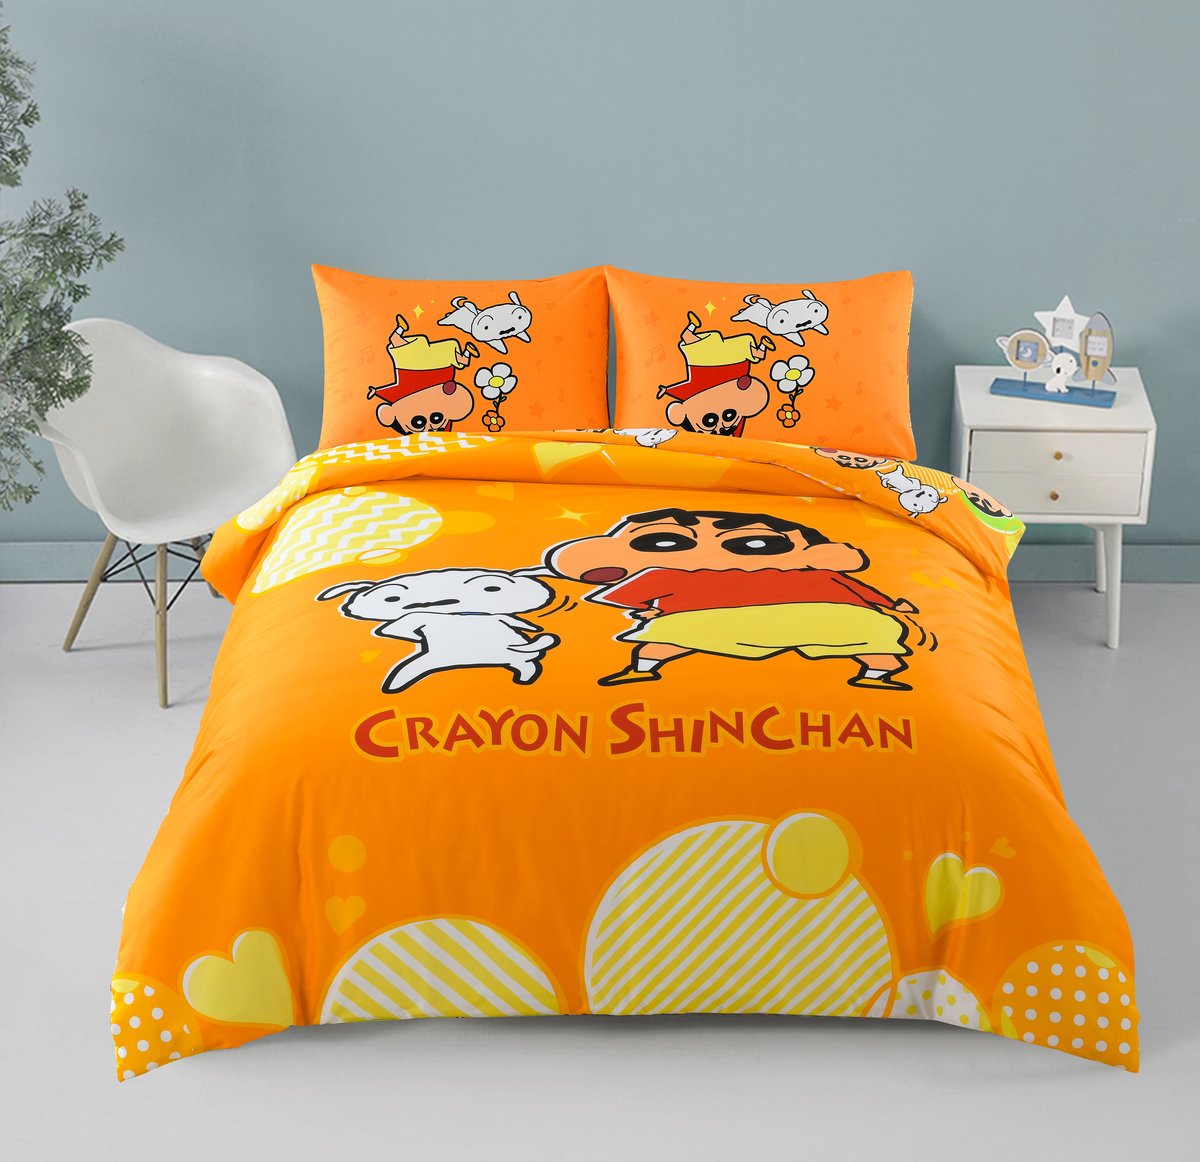 Casablanca Crayon Shinchan Cartoon Cotton Series Bedding Set Single Sc001gbs36 Size Single Hktvmall The Largest Hk Shopping Platform